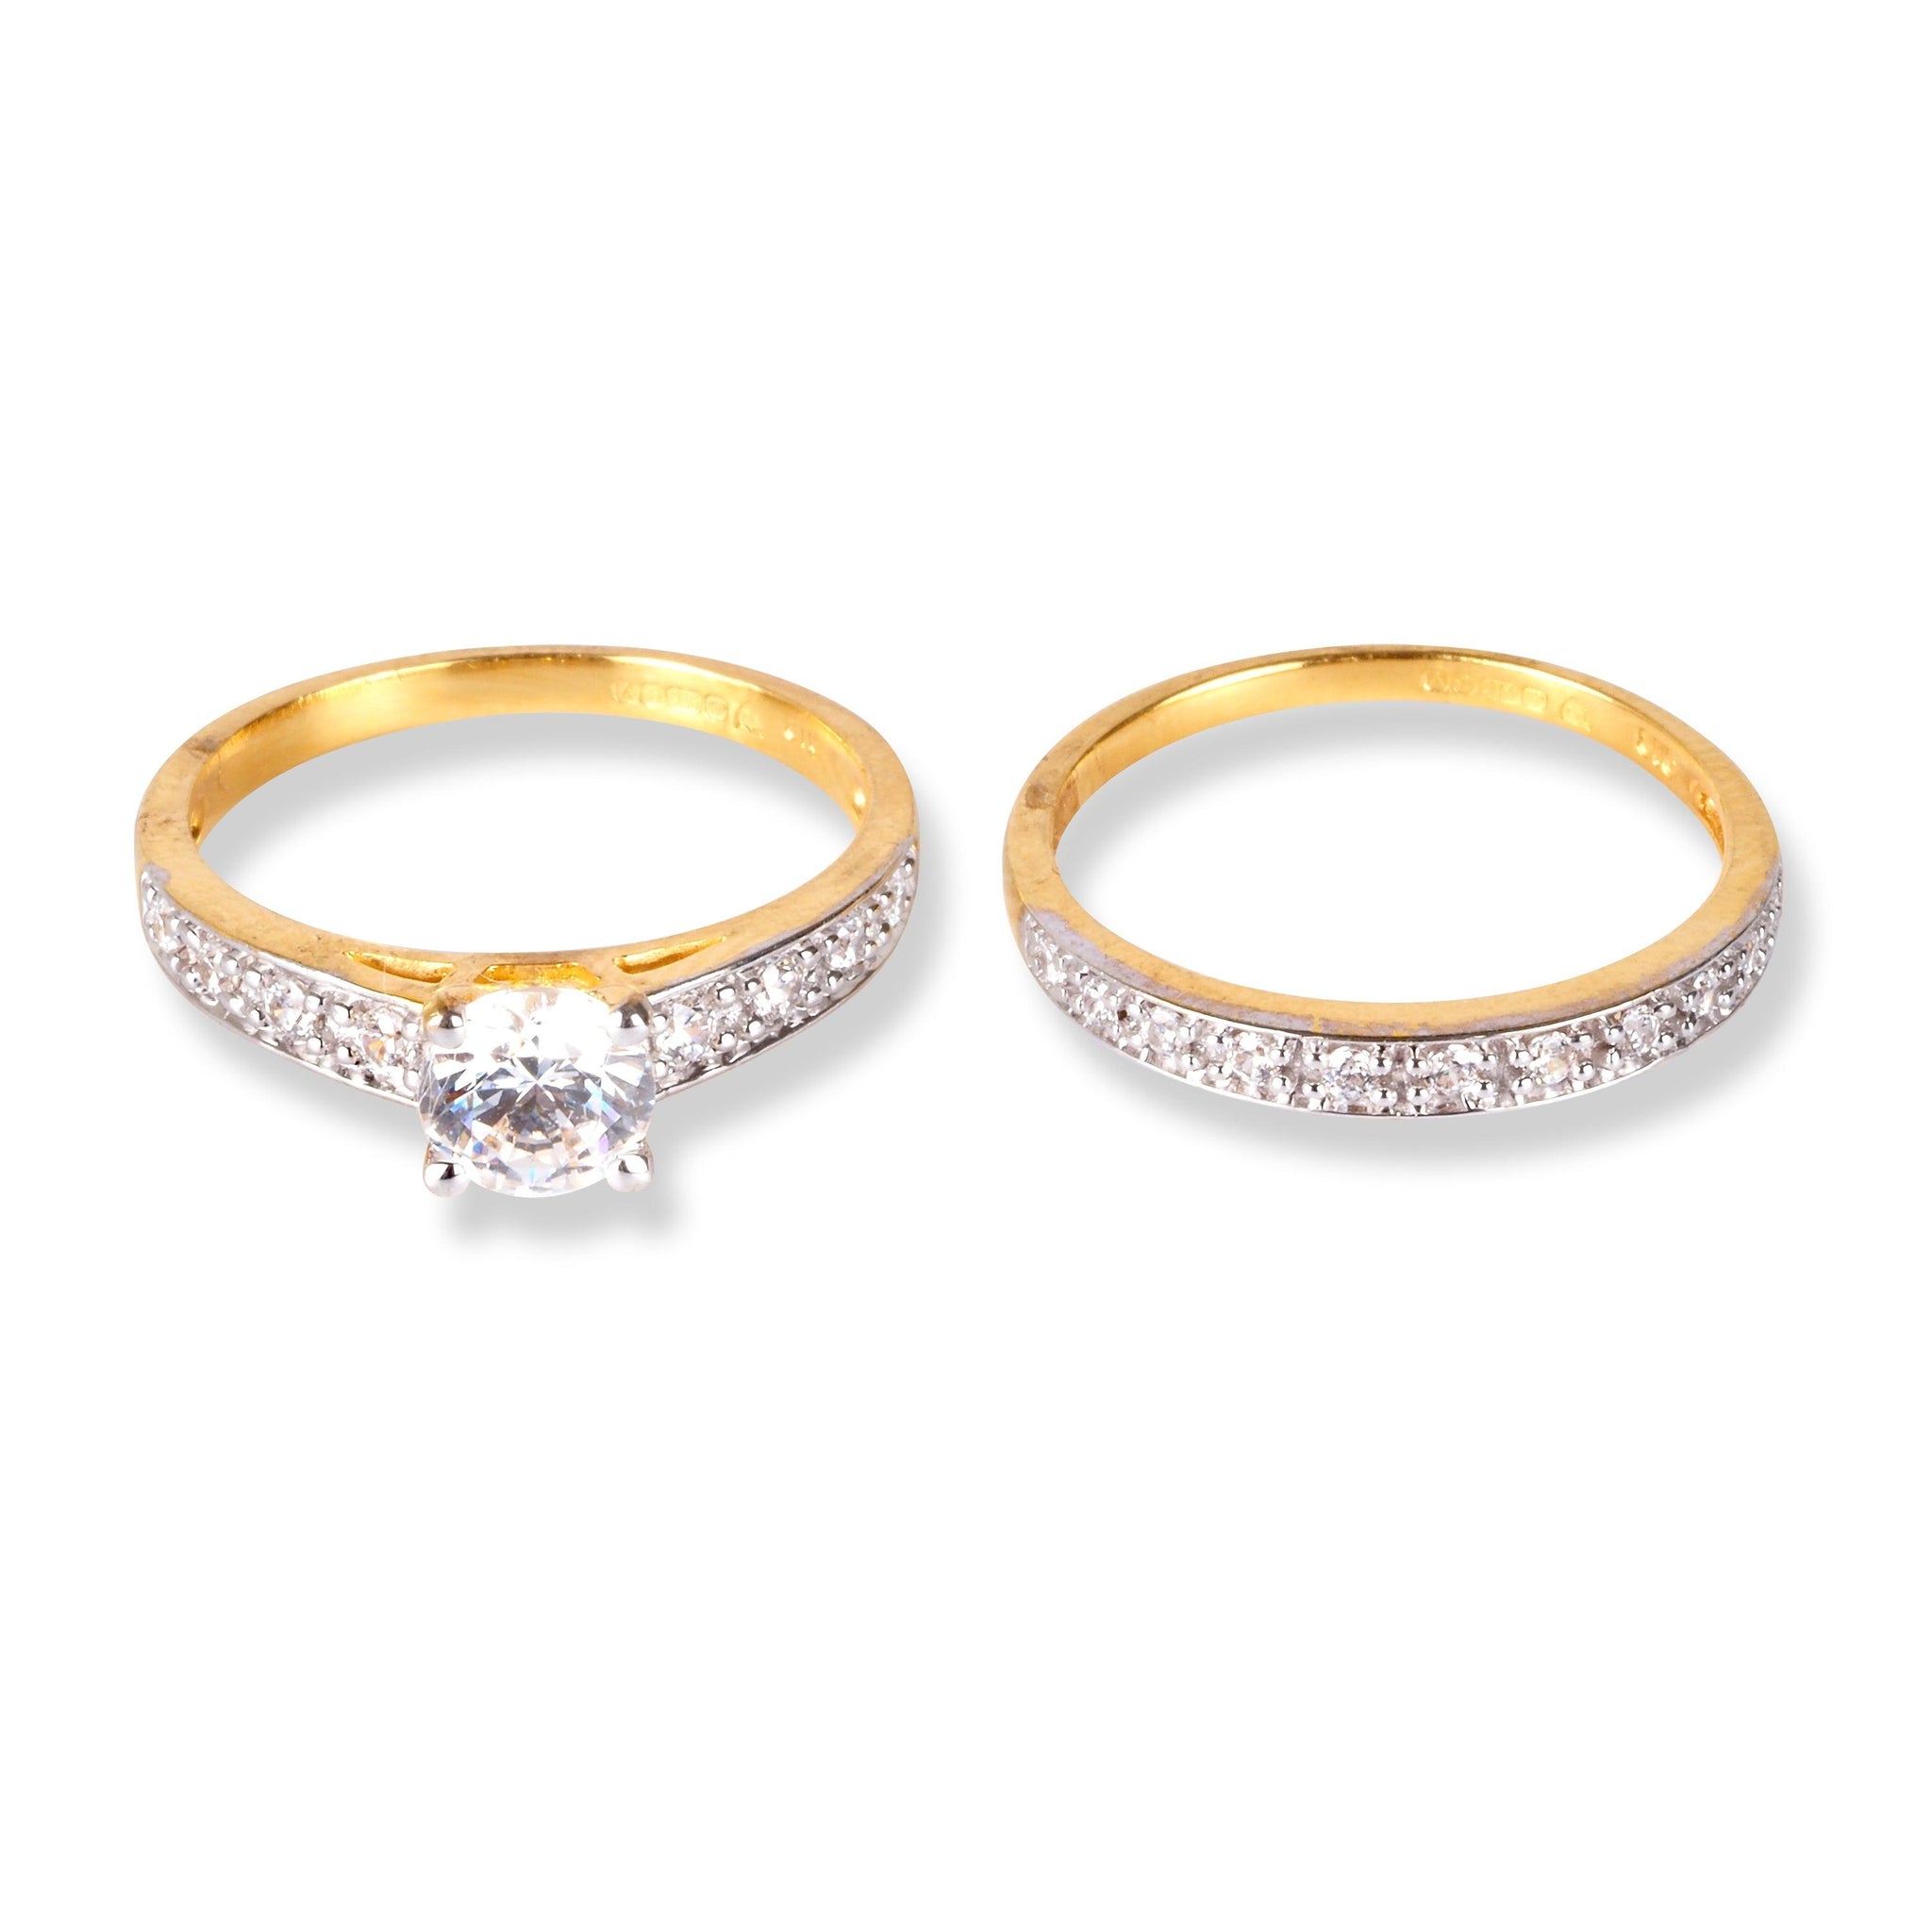 22ct Gold Engagement Ring and Wedding Band Set with Swarovski Zirconia Stones LR-6632